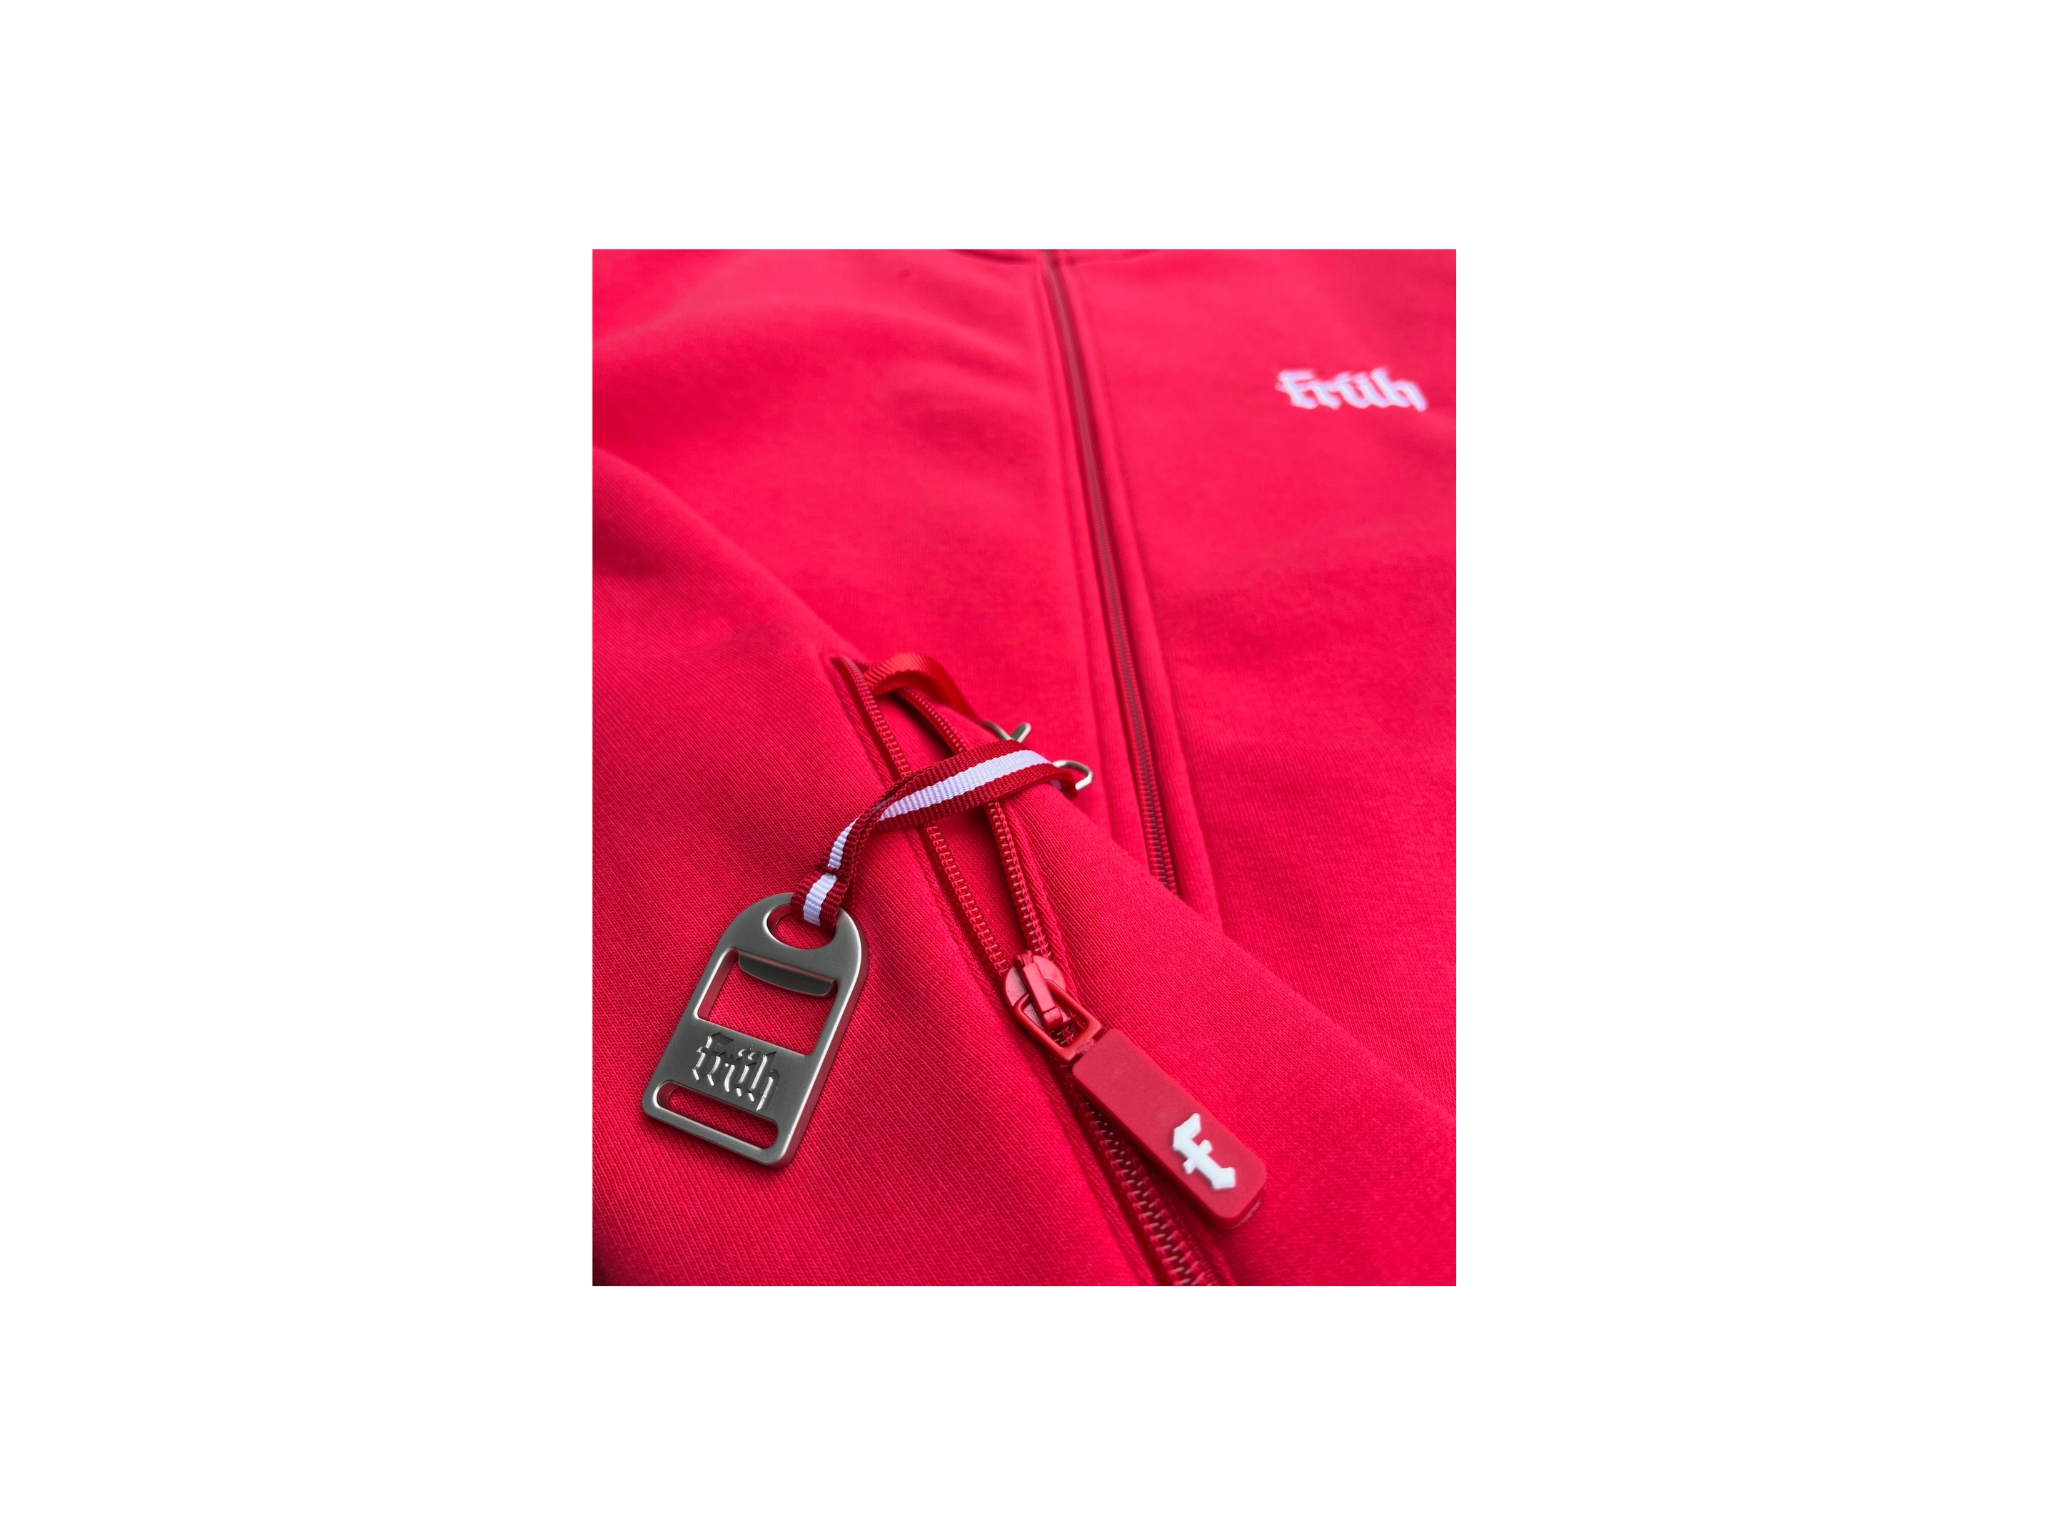 FRÜH Sweatjacke Rot mit Reißverschluss XL